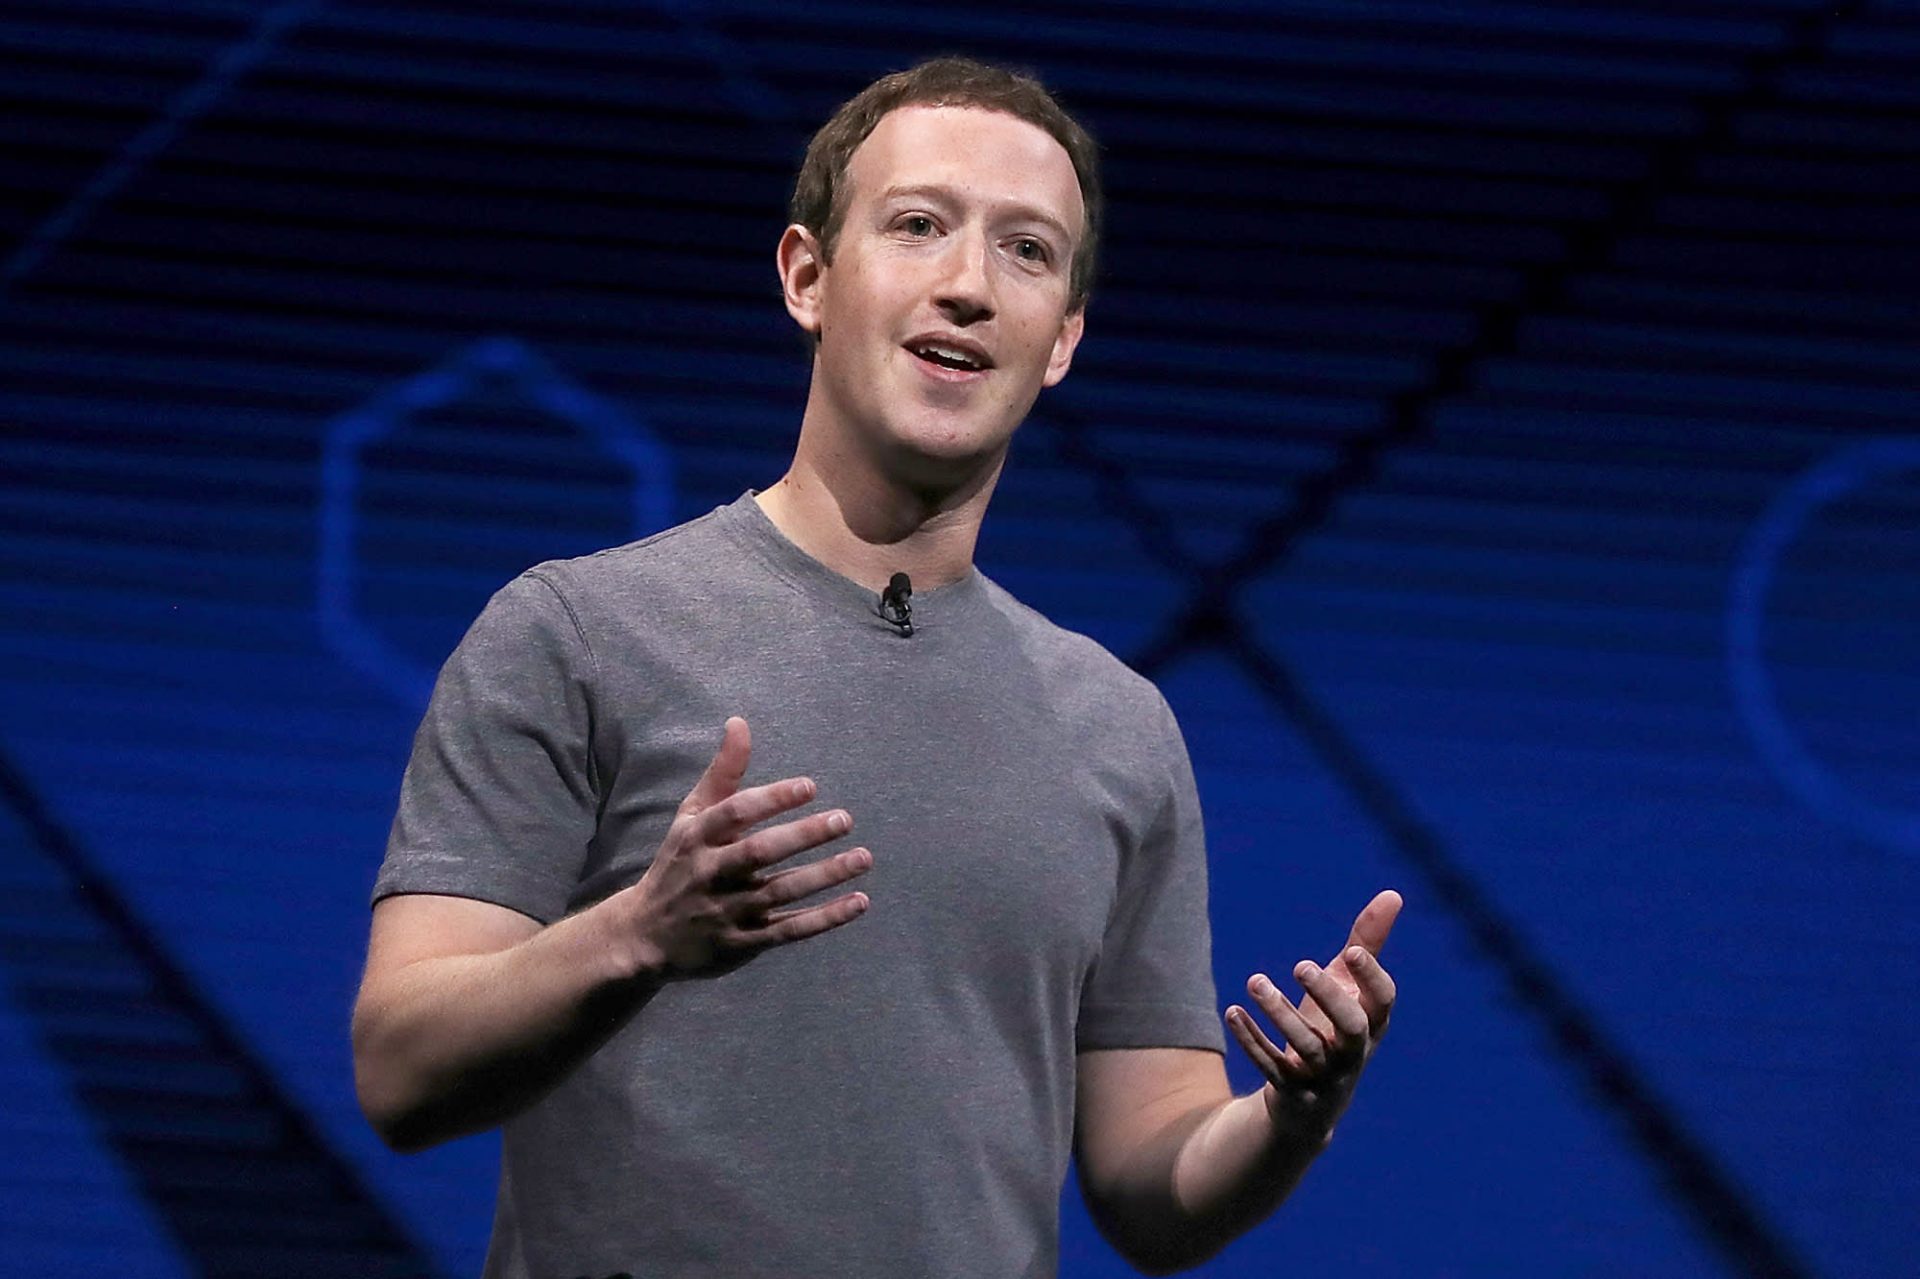 Mark Zuckerberg Is No Longer Seen Among The Top 30 Richest Individuals